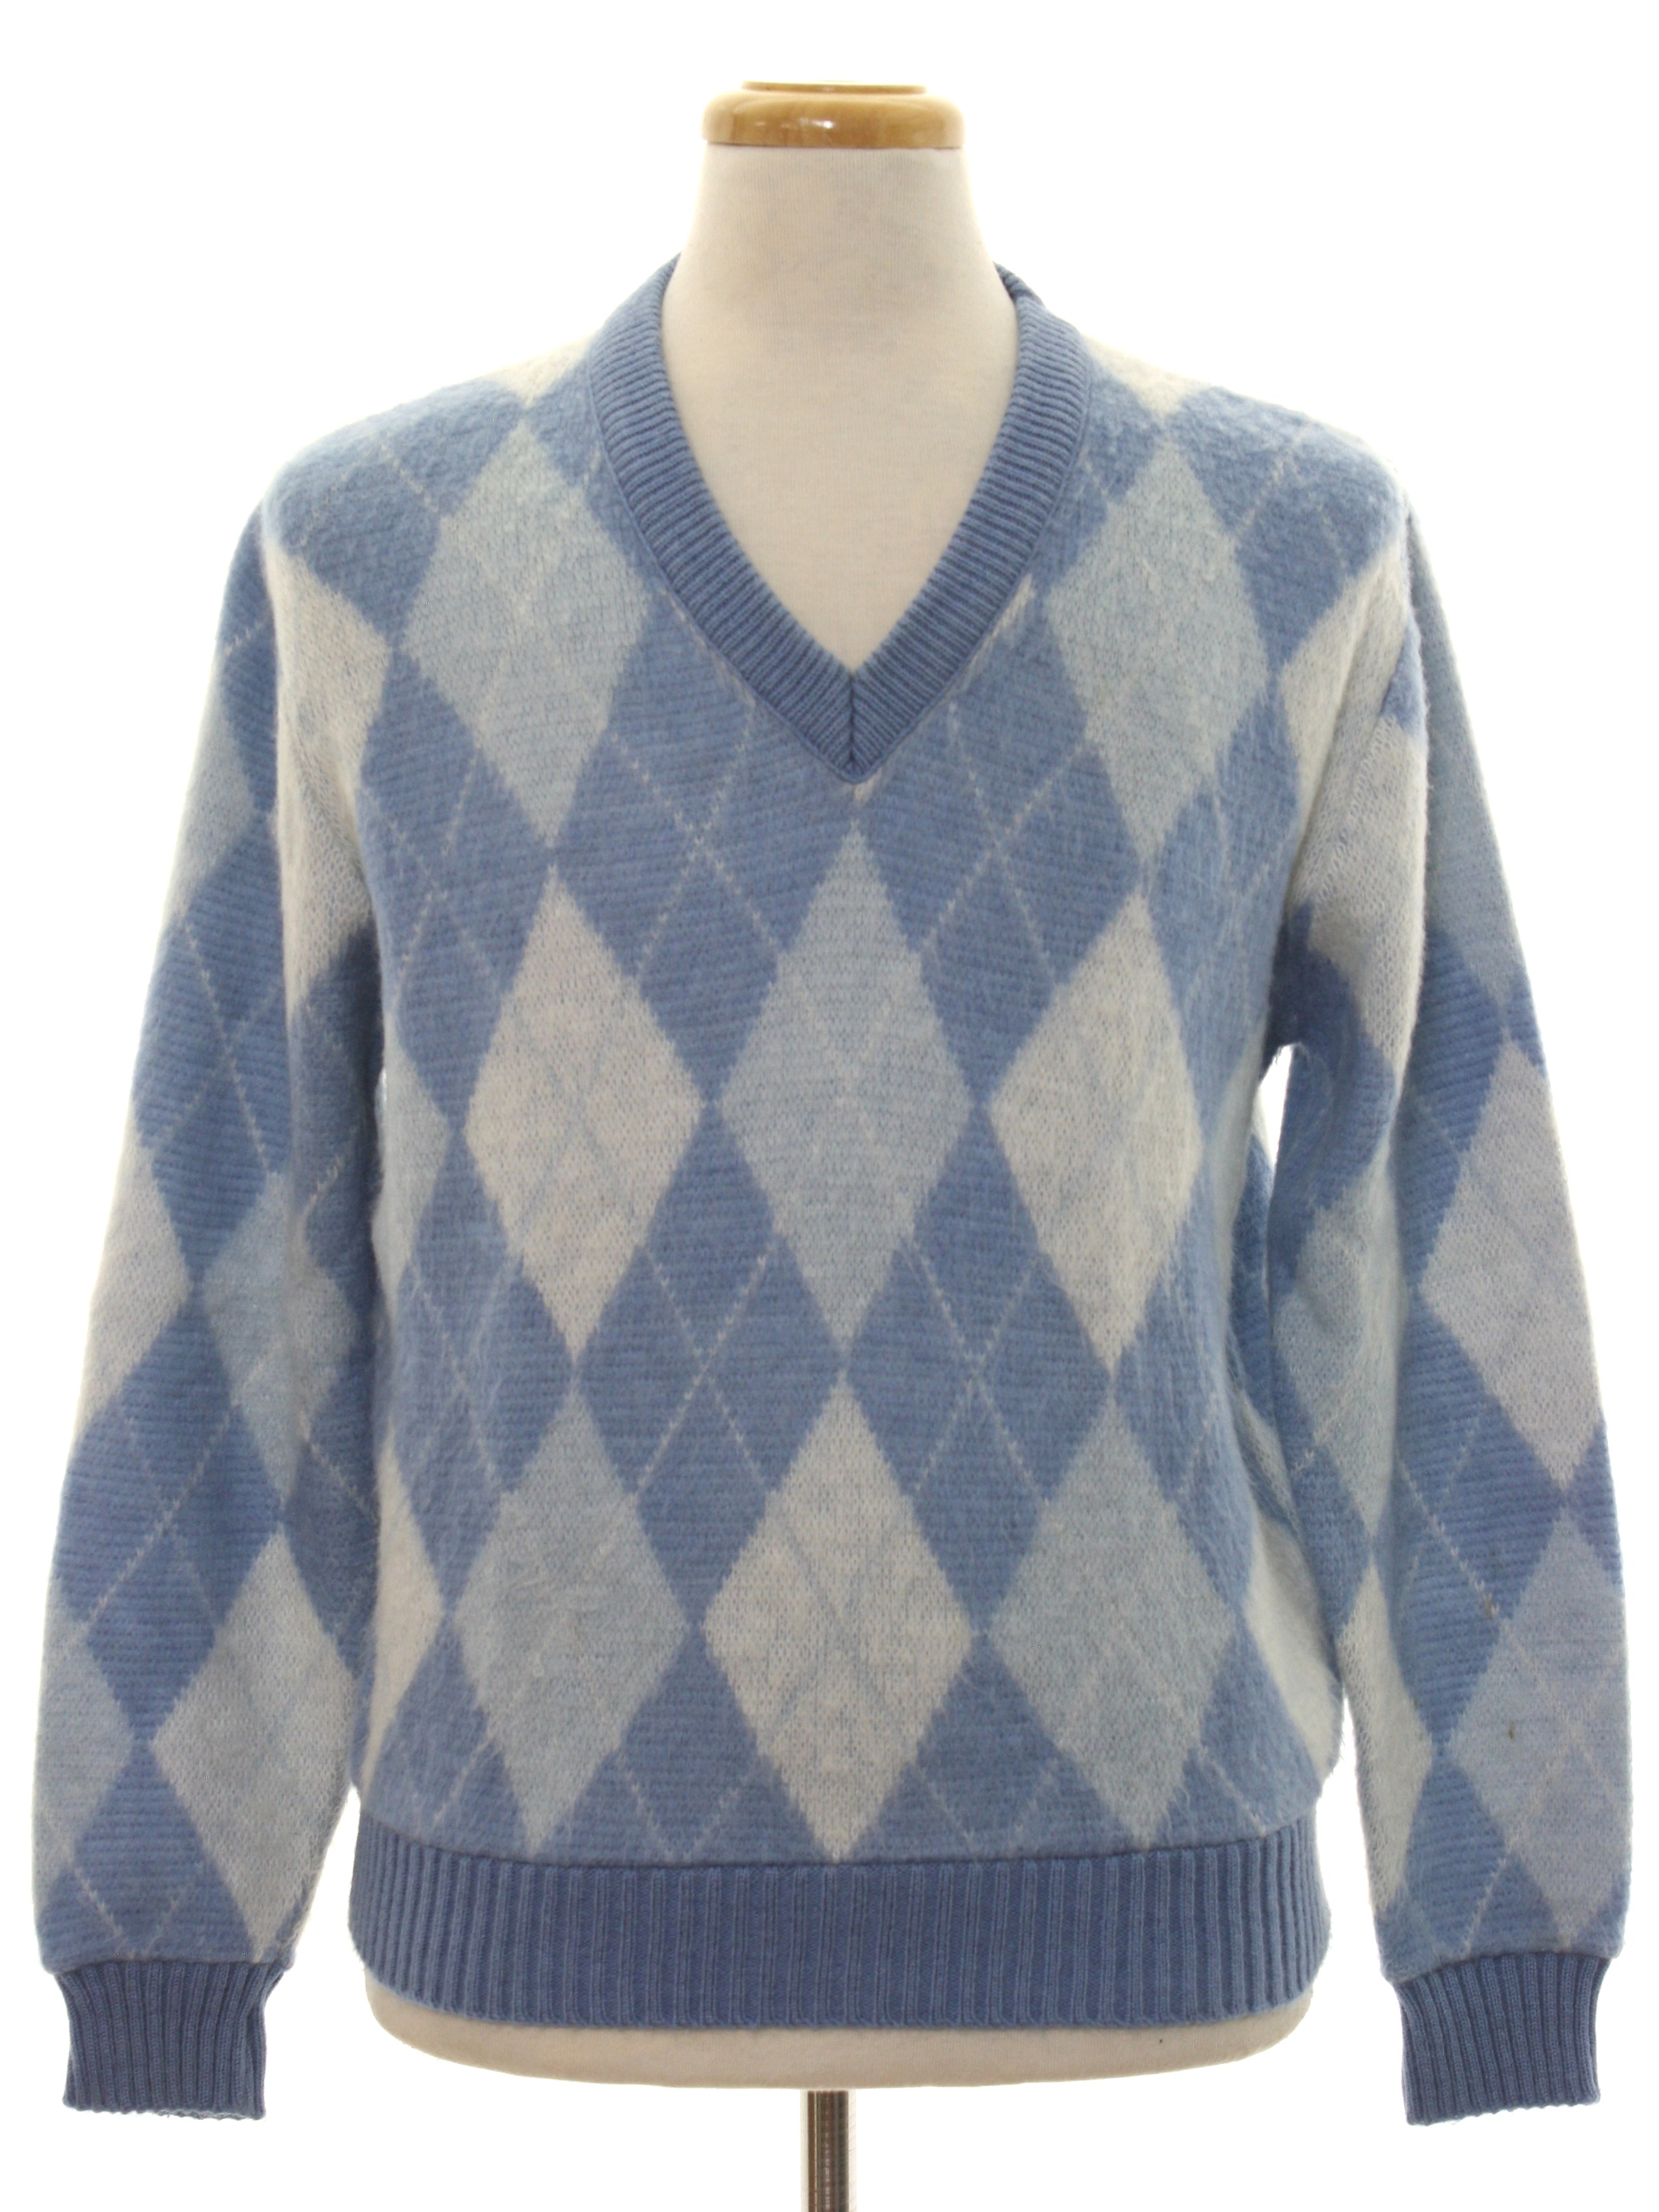 Retro 1960s Sweater: Late 60s -Jantzen- Mens light blue, white and ...